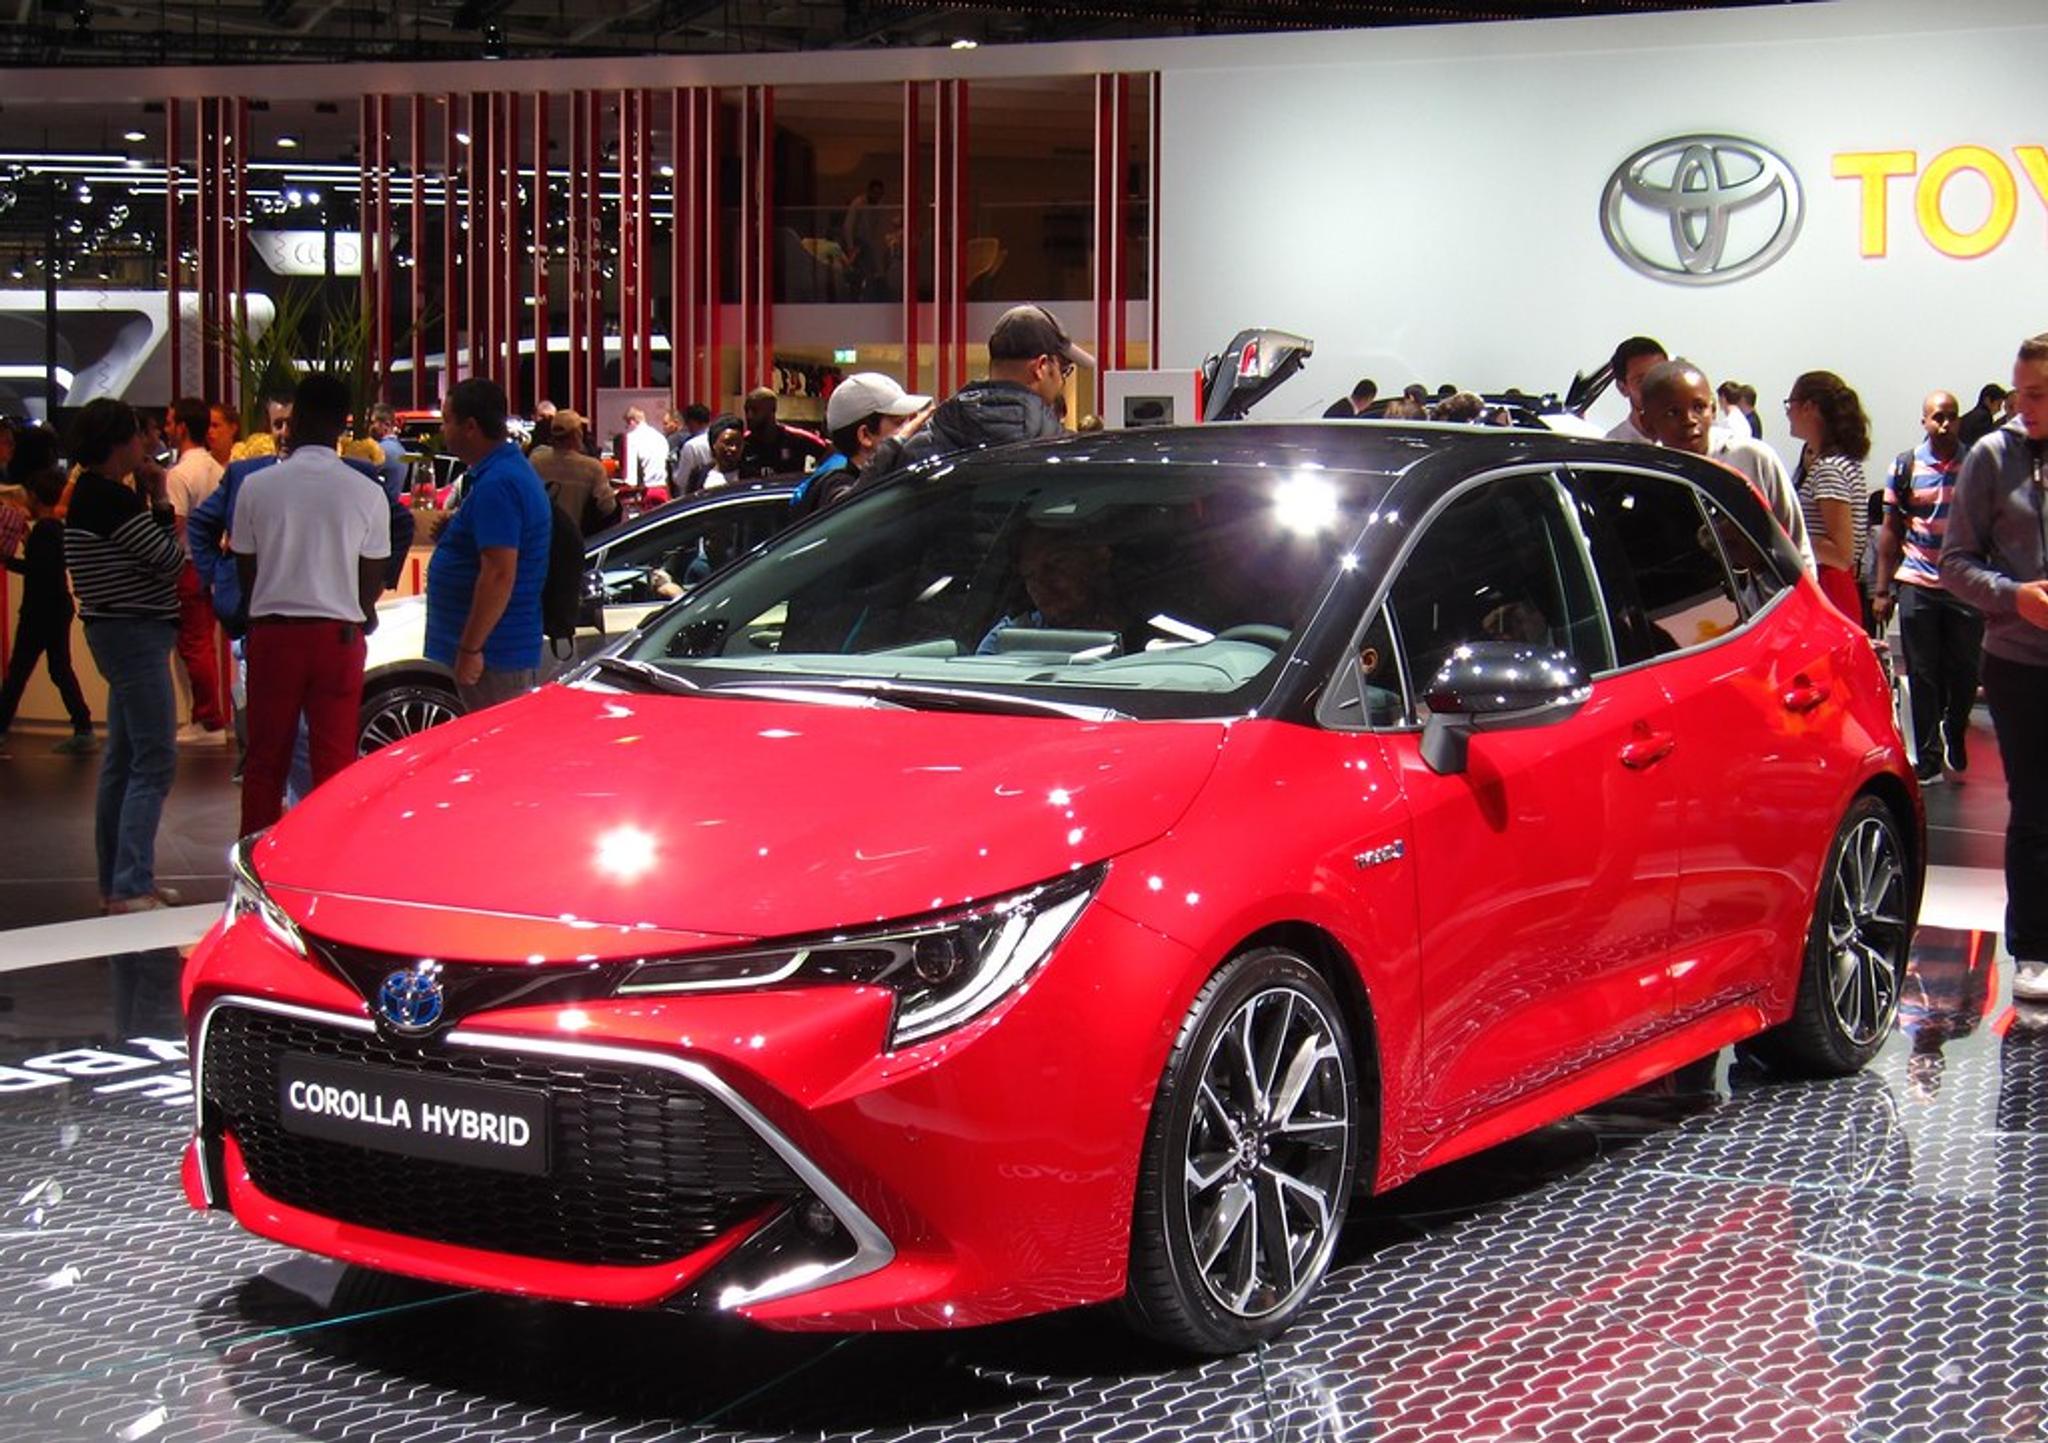 Red Toyota Corolla Hybrid in a showroom